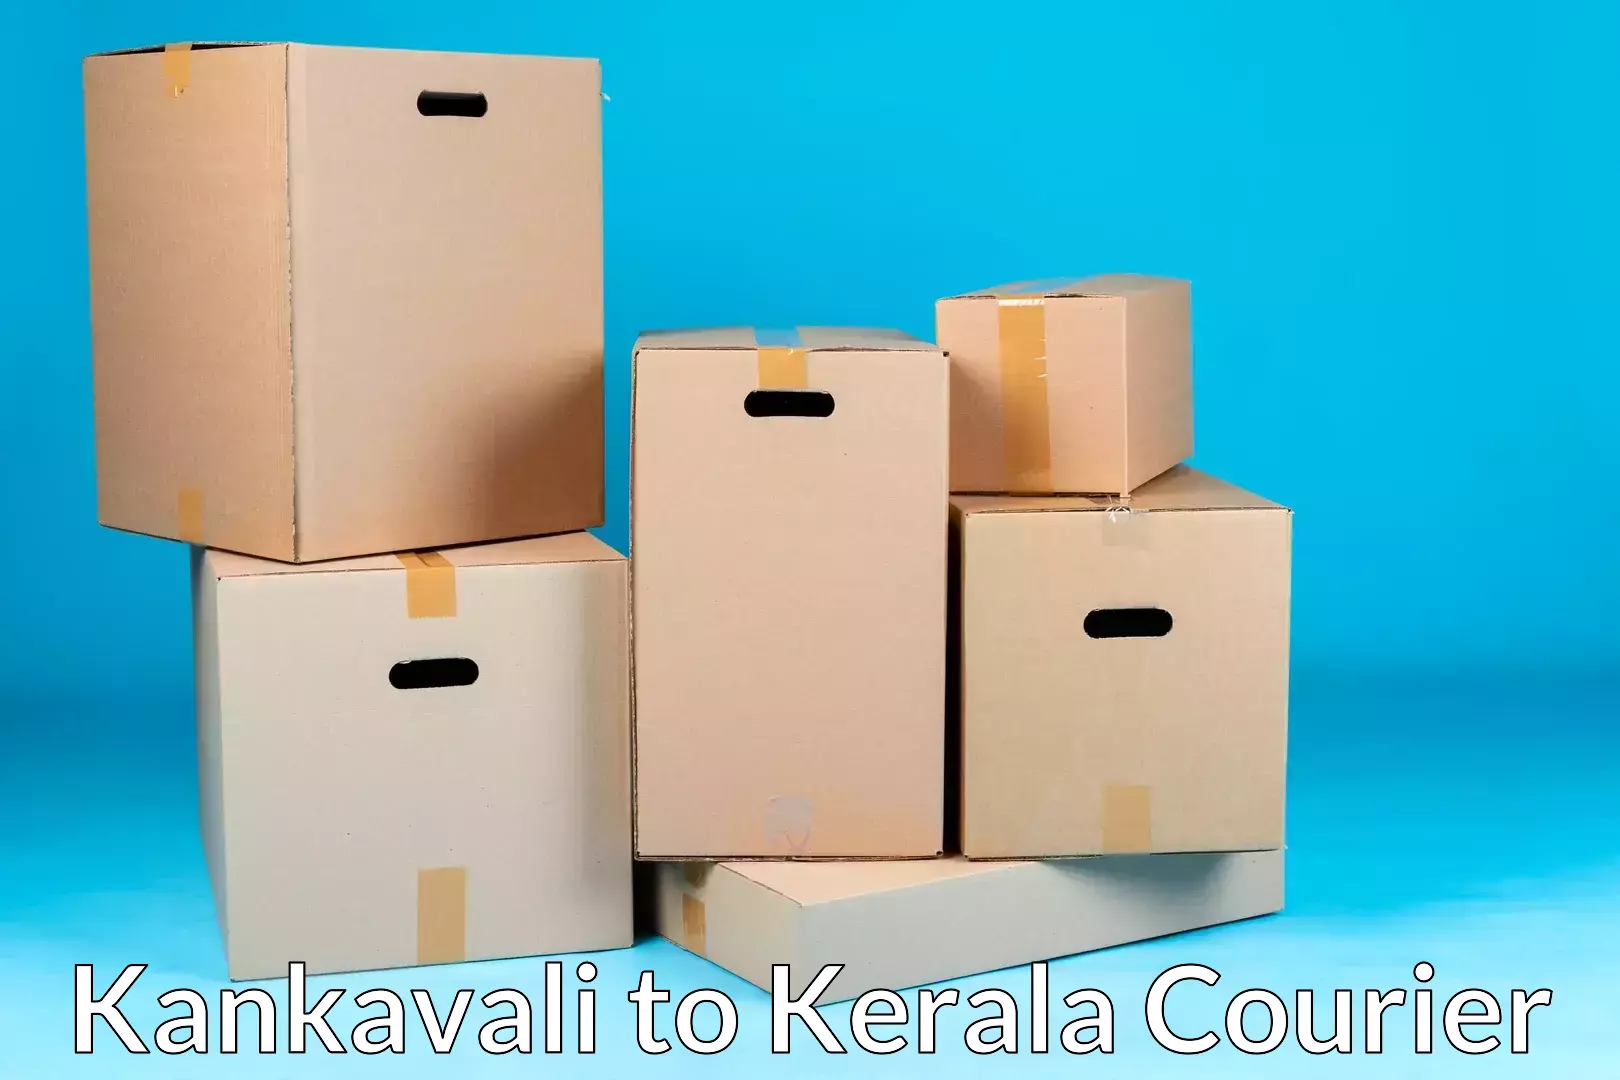 Quality relocation assistance Kankavali to Kochi